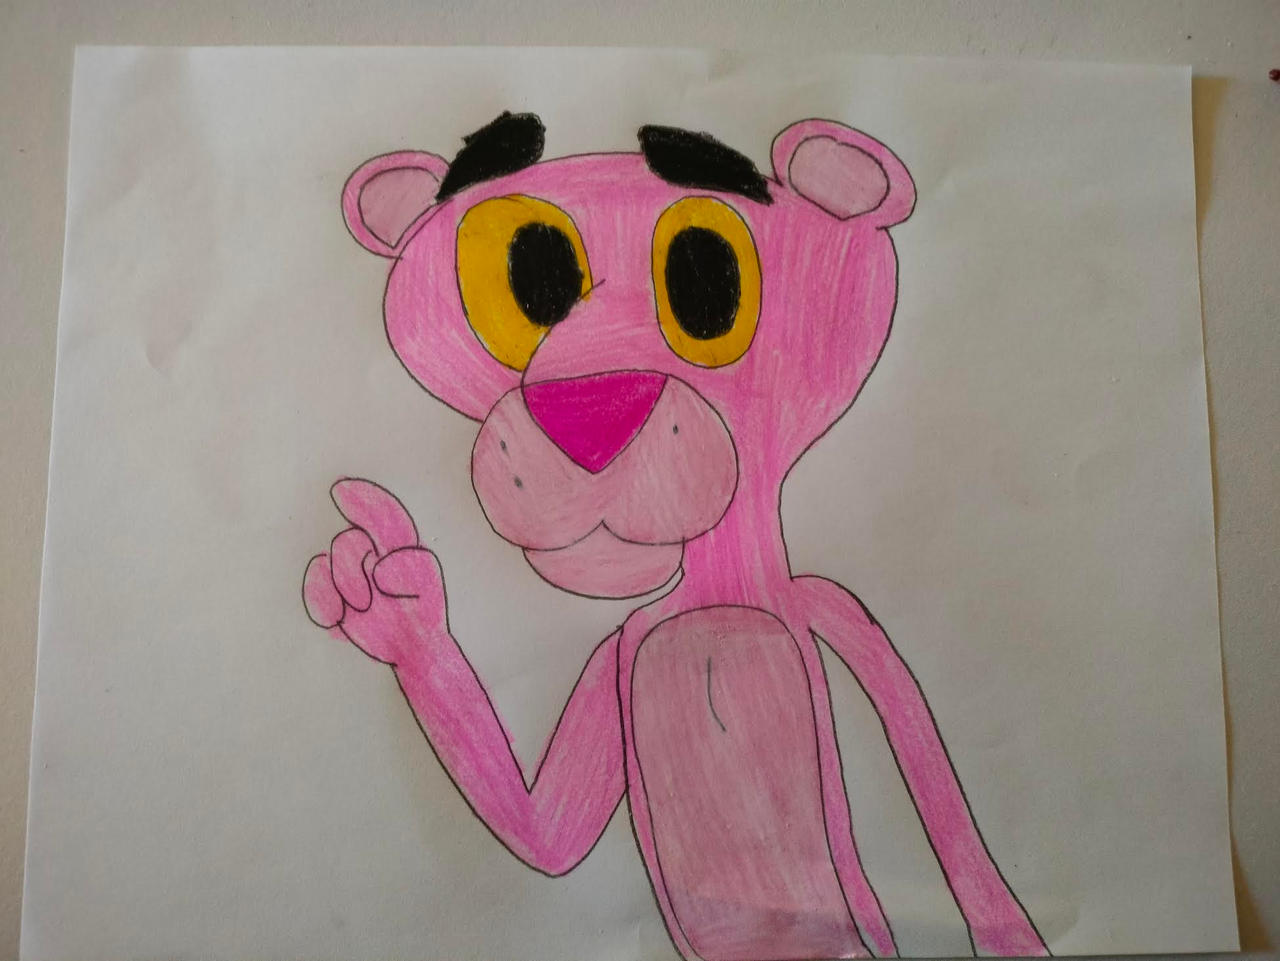 Pink Panther by jamesthecartoonist on DeviantArt